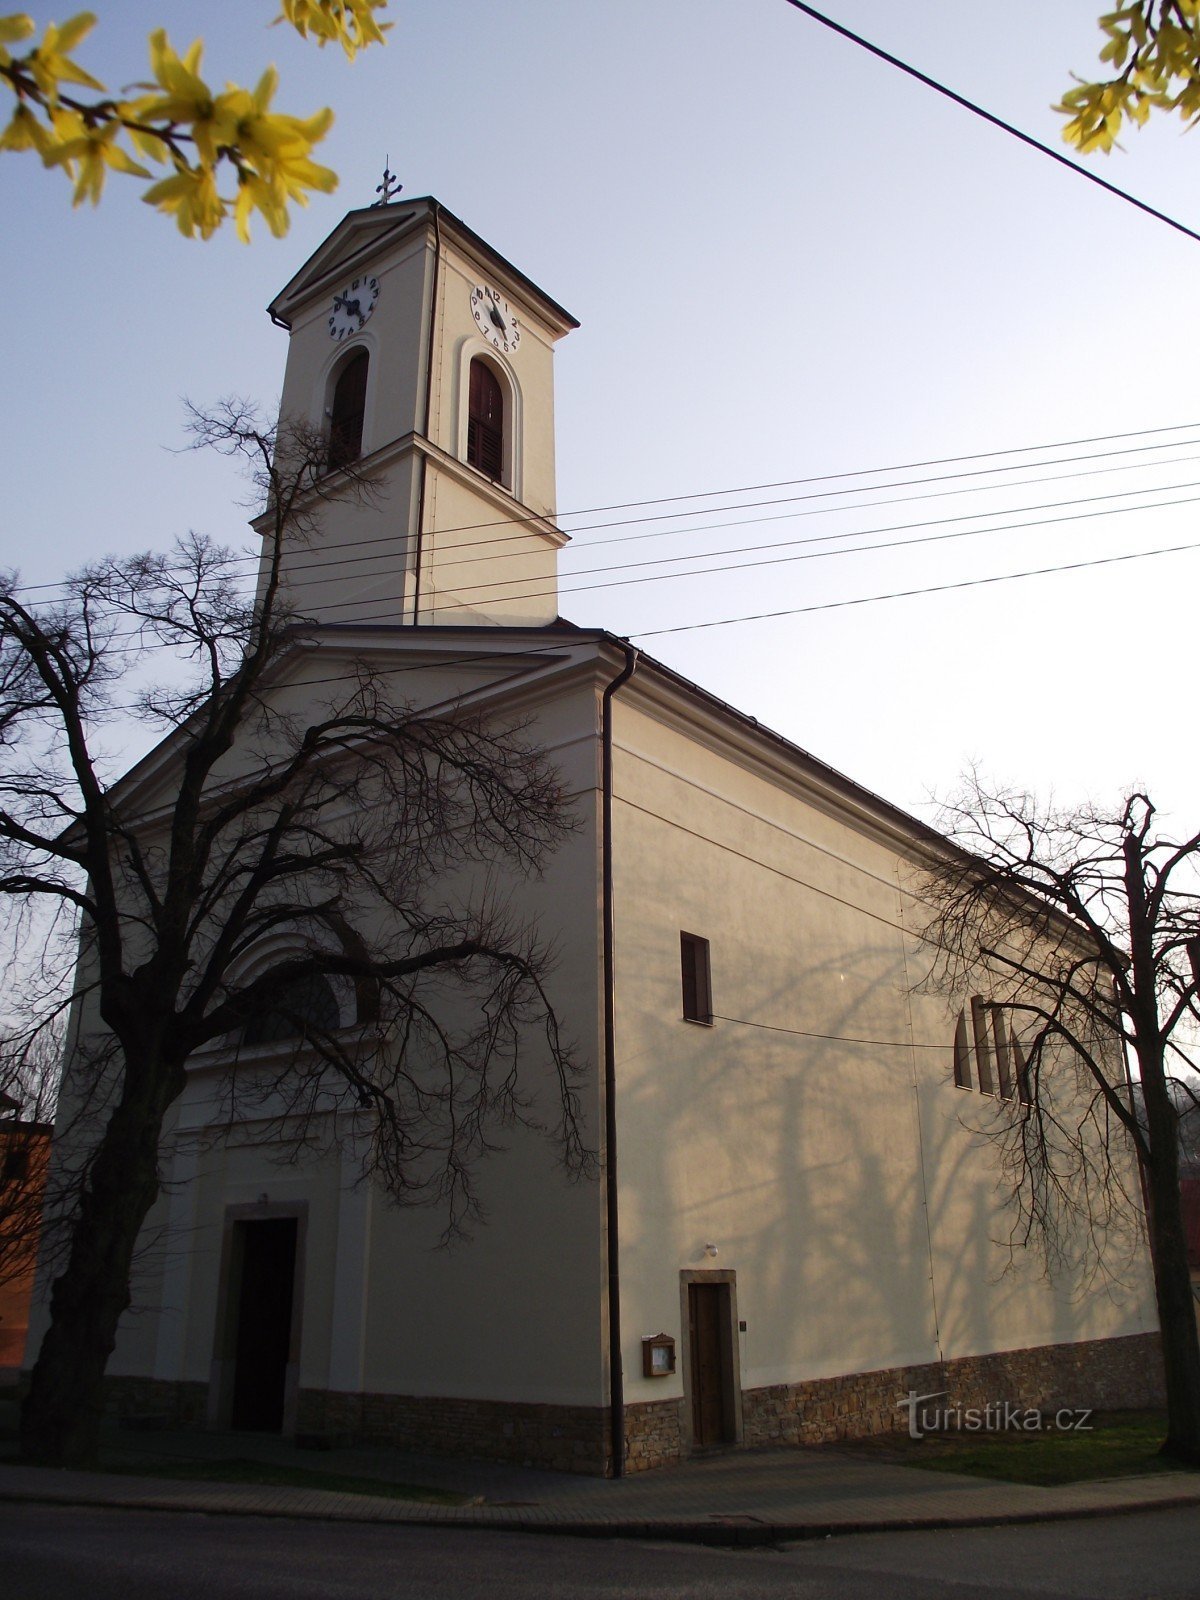 Reichskirche in Komni